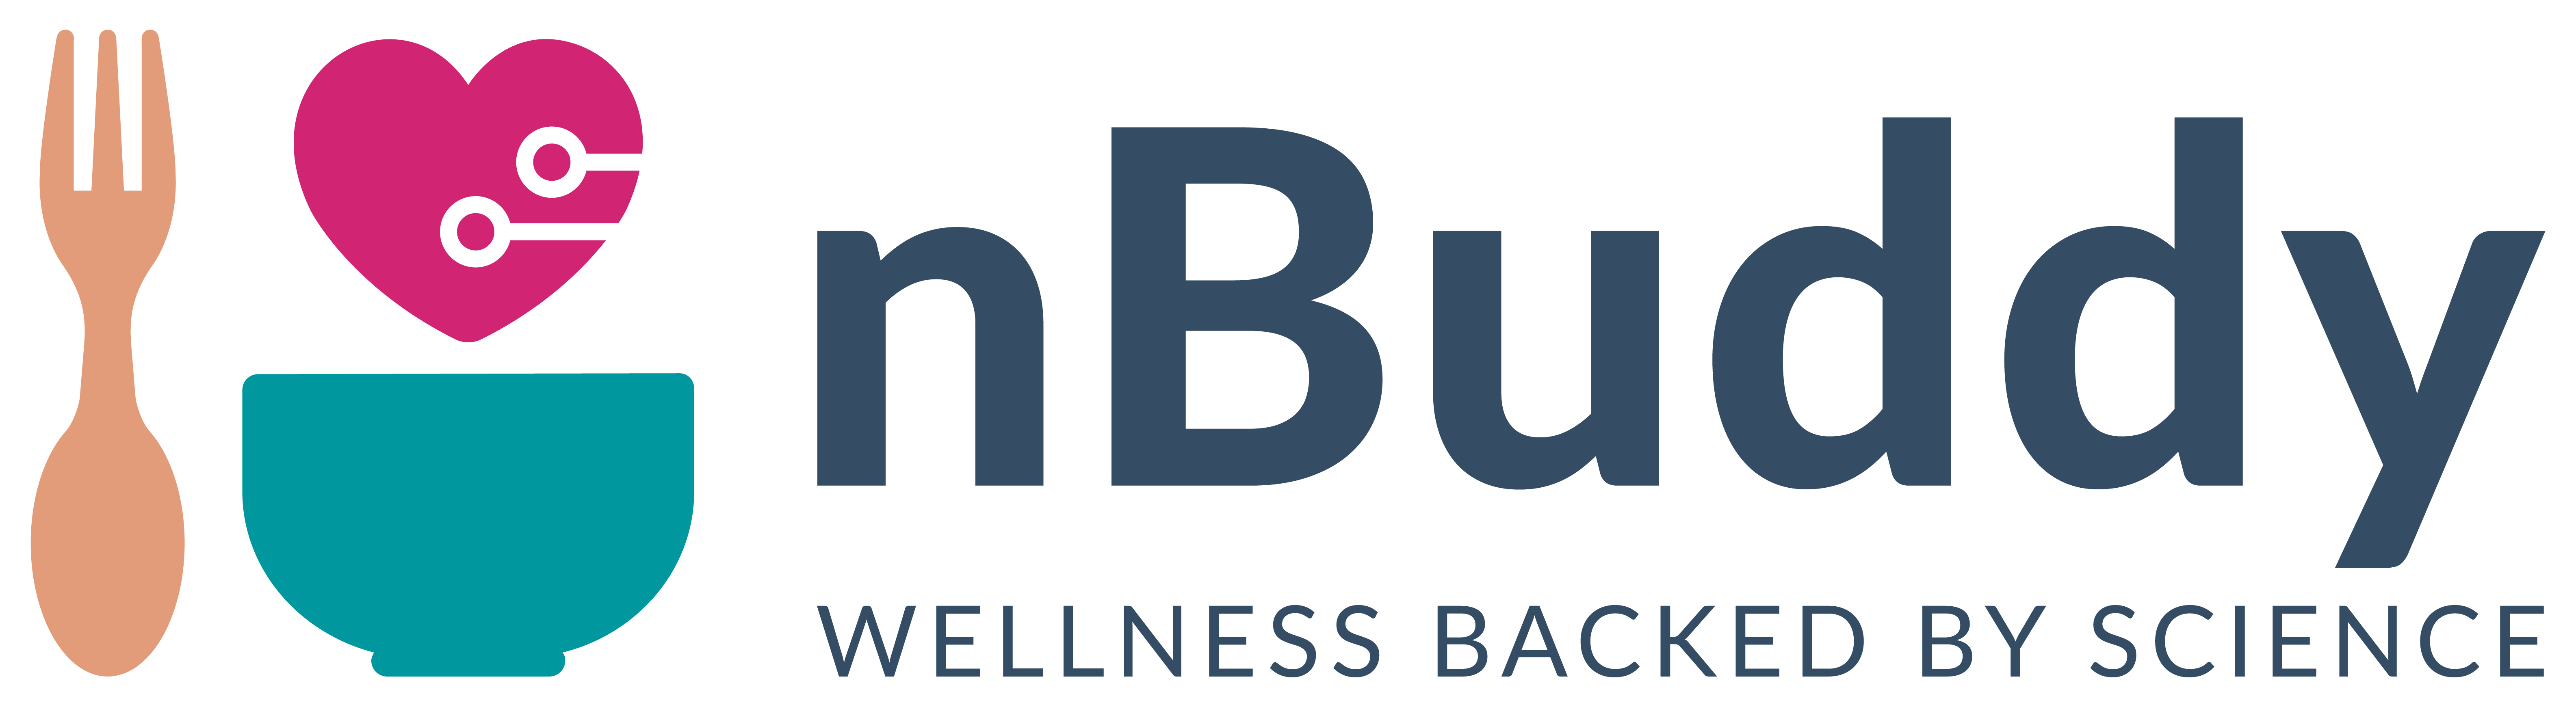 nBuddy: Wellness Backed By Science